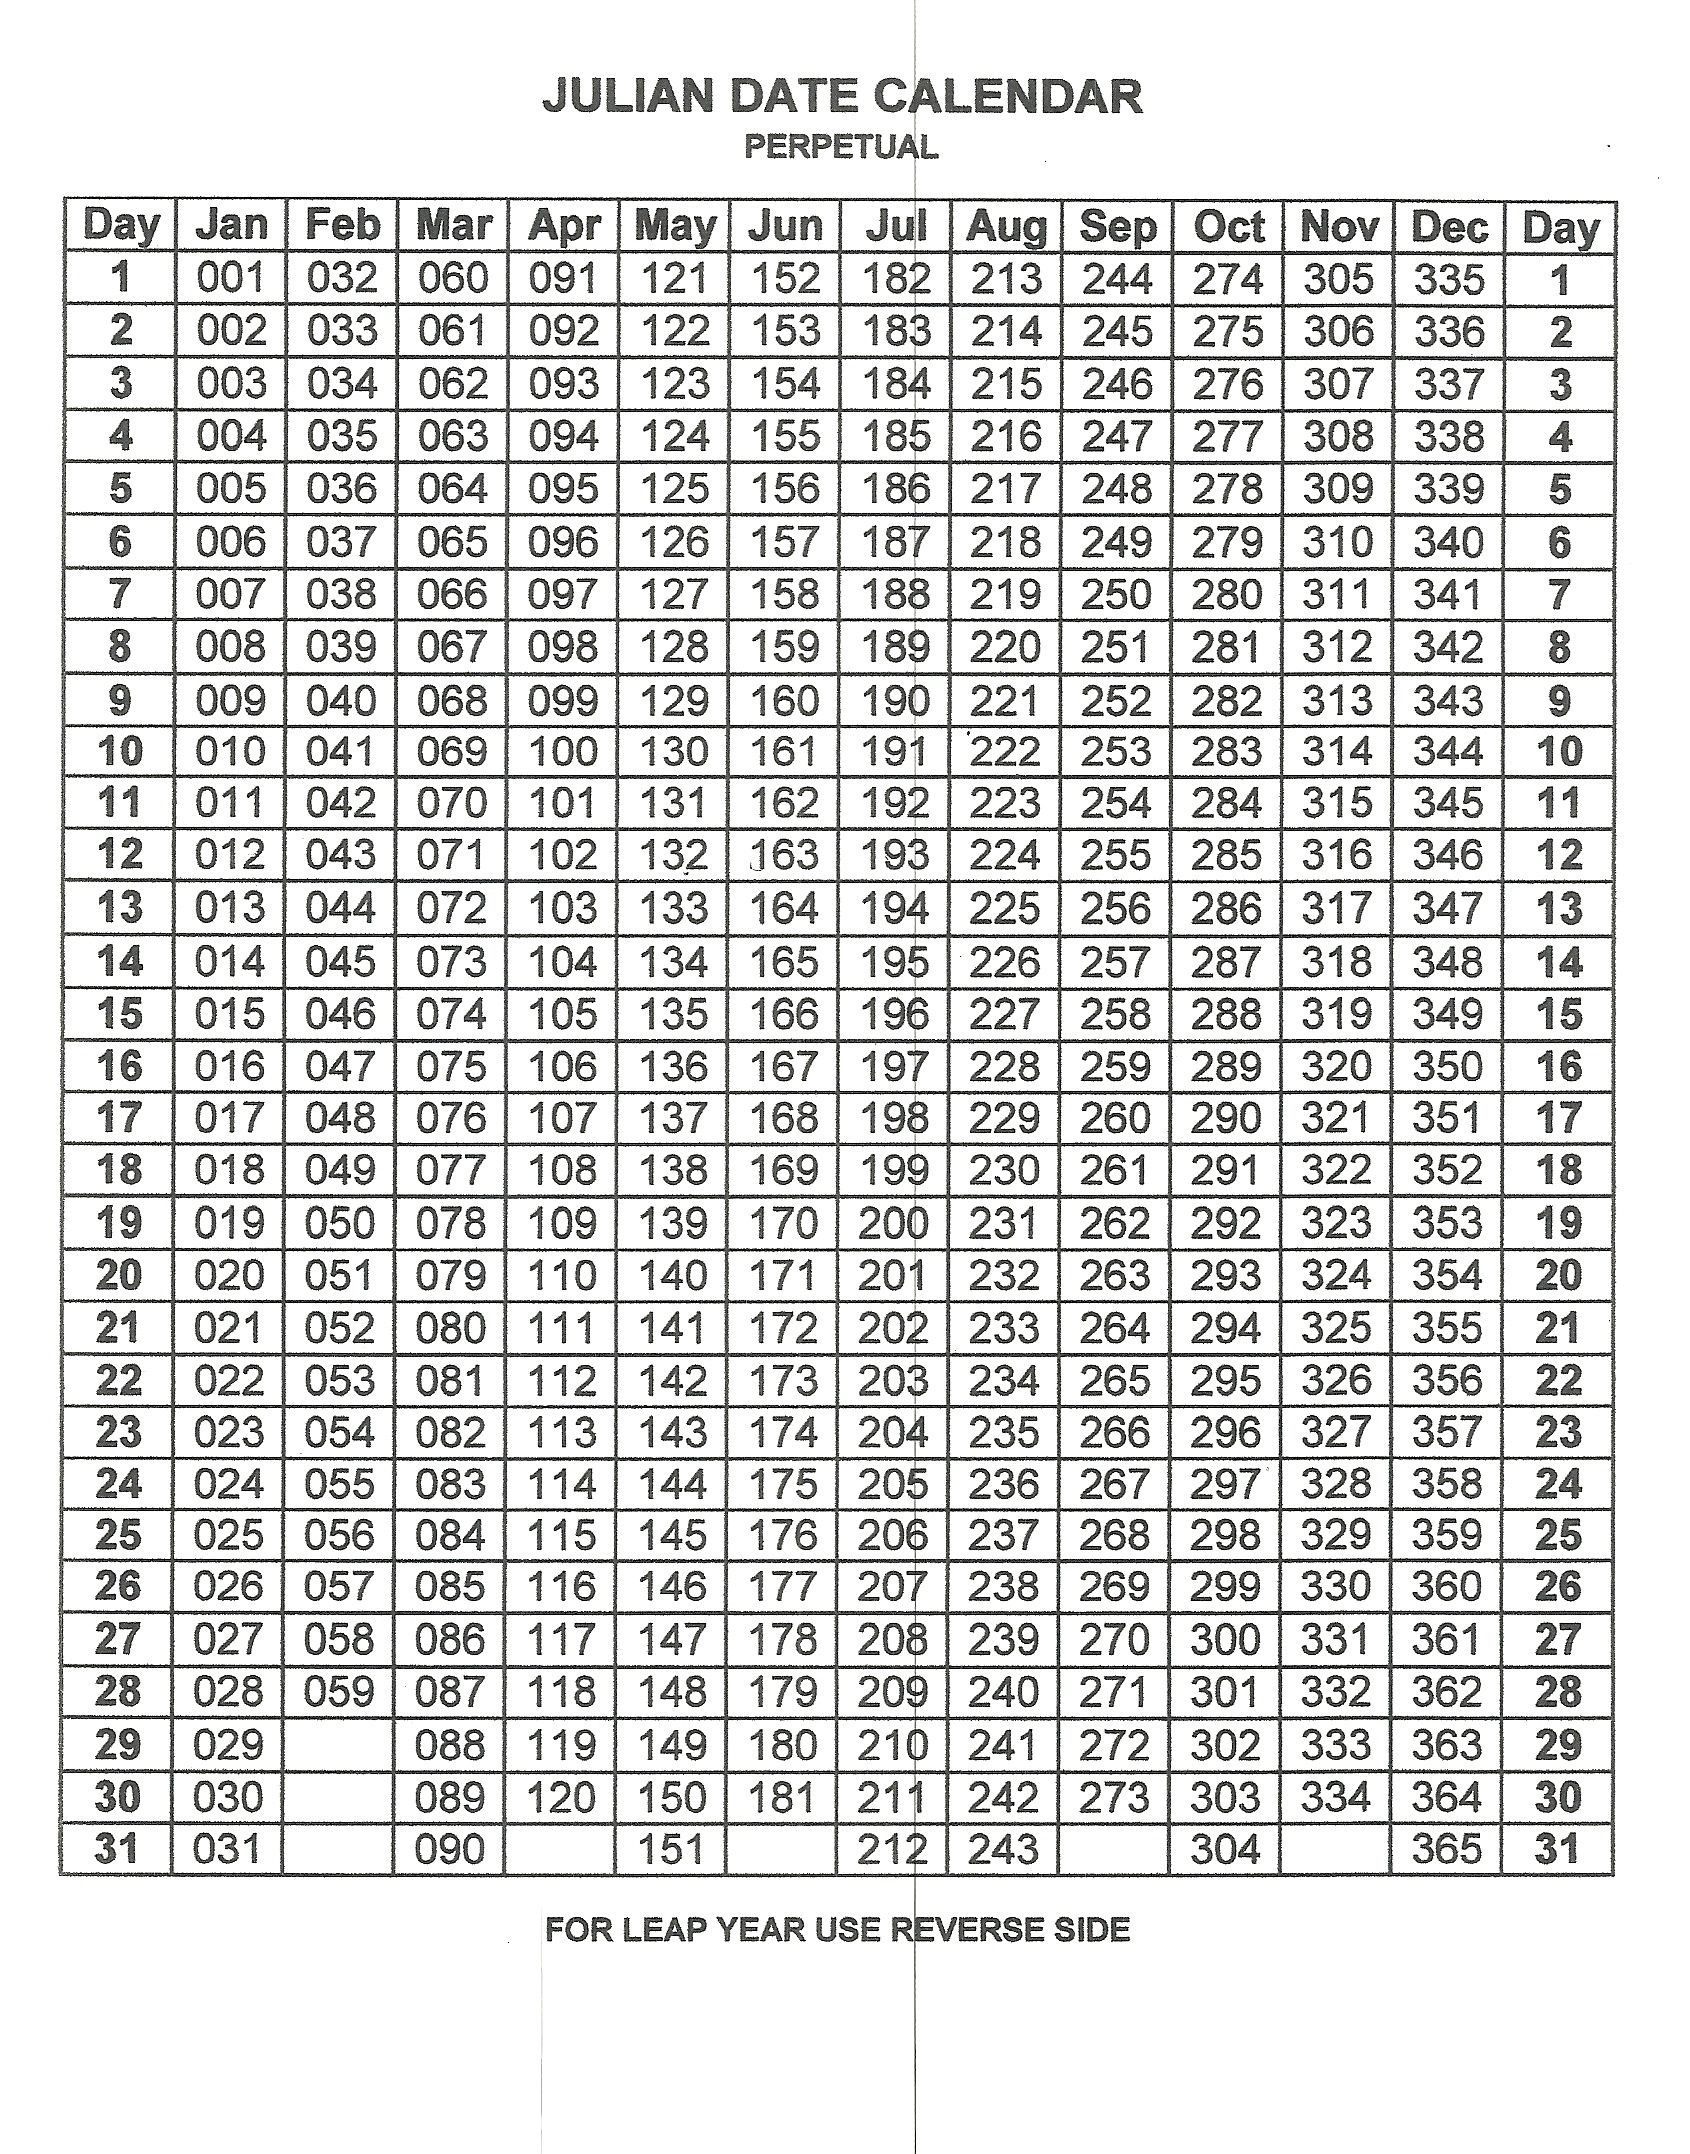 Perpetual Julian Date Calendar | Julian Dates, Calendar  2020 Julian Date Calendar Printable